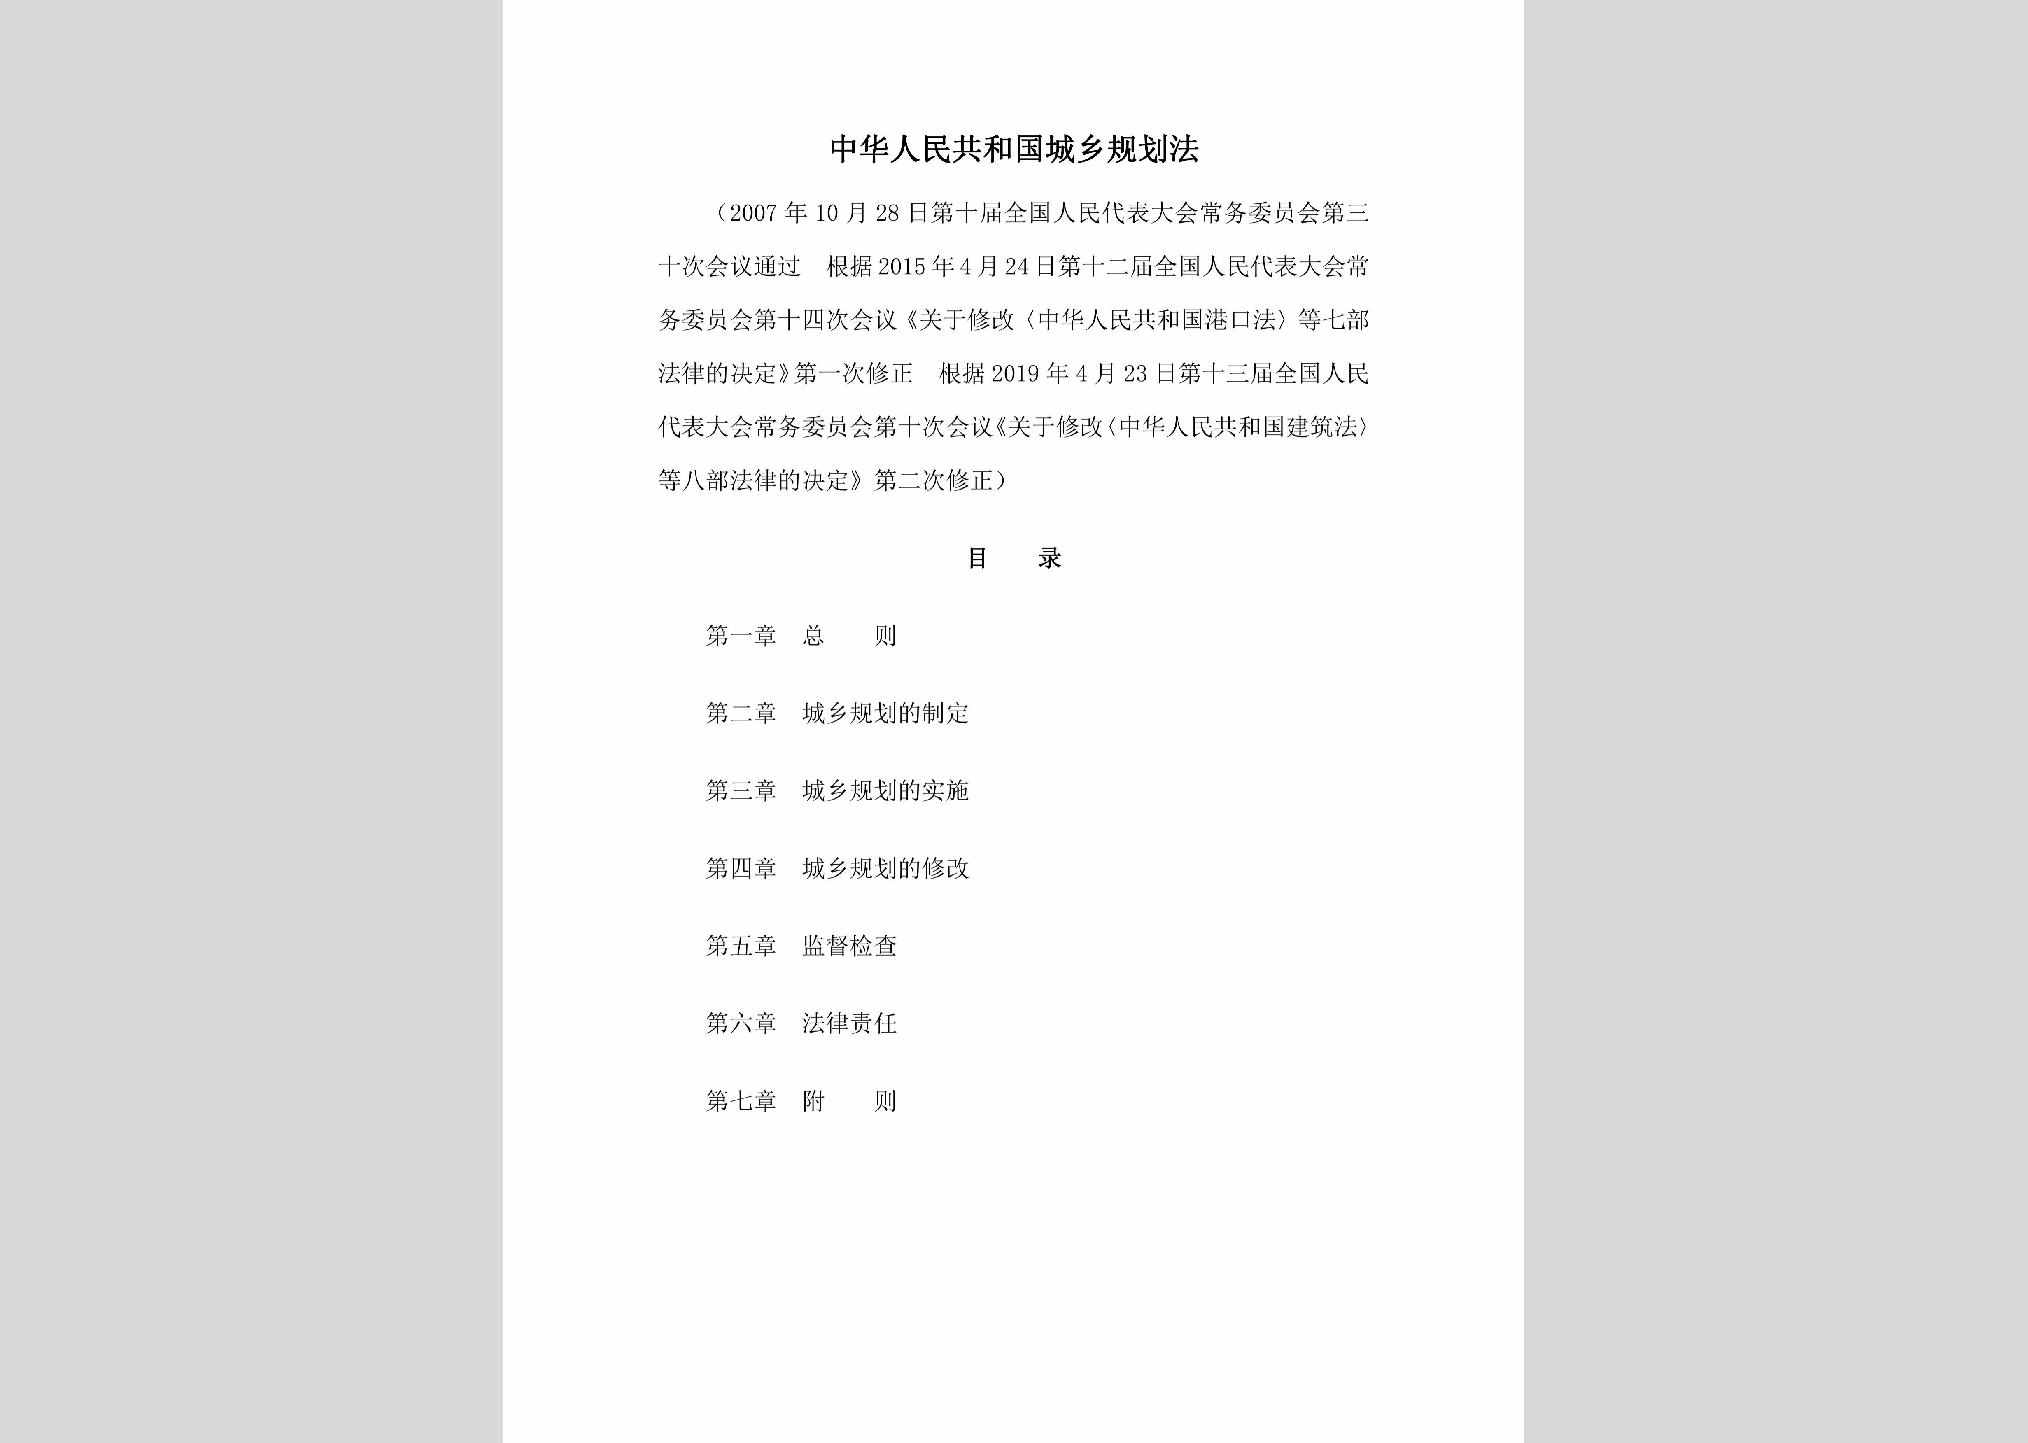 ZHRMGHGC：中华人民共和国城乡规划法